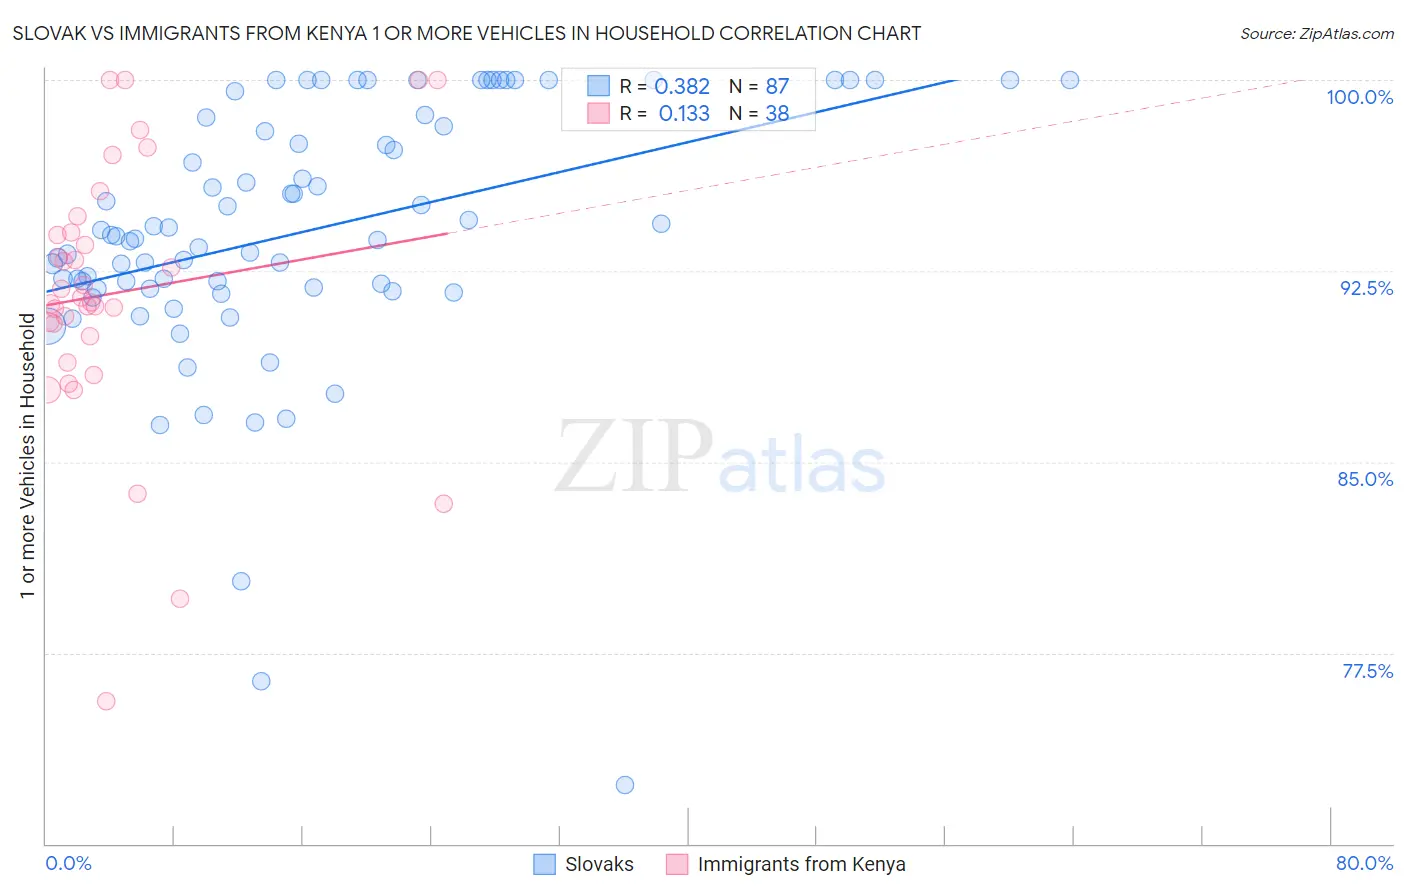 Slovak vs Immigrants from Kenya 1 or more Vehicles in Household